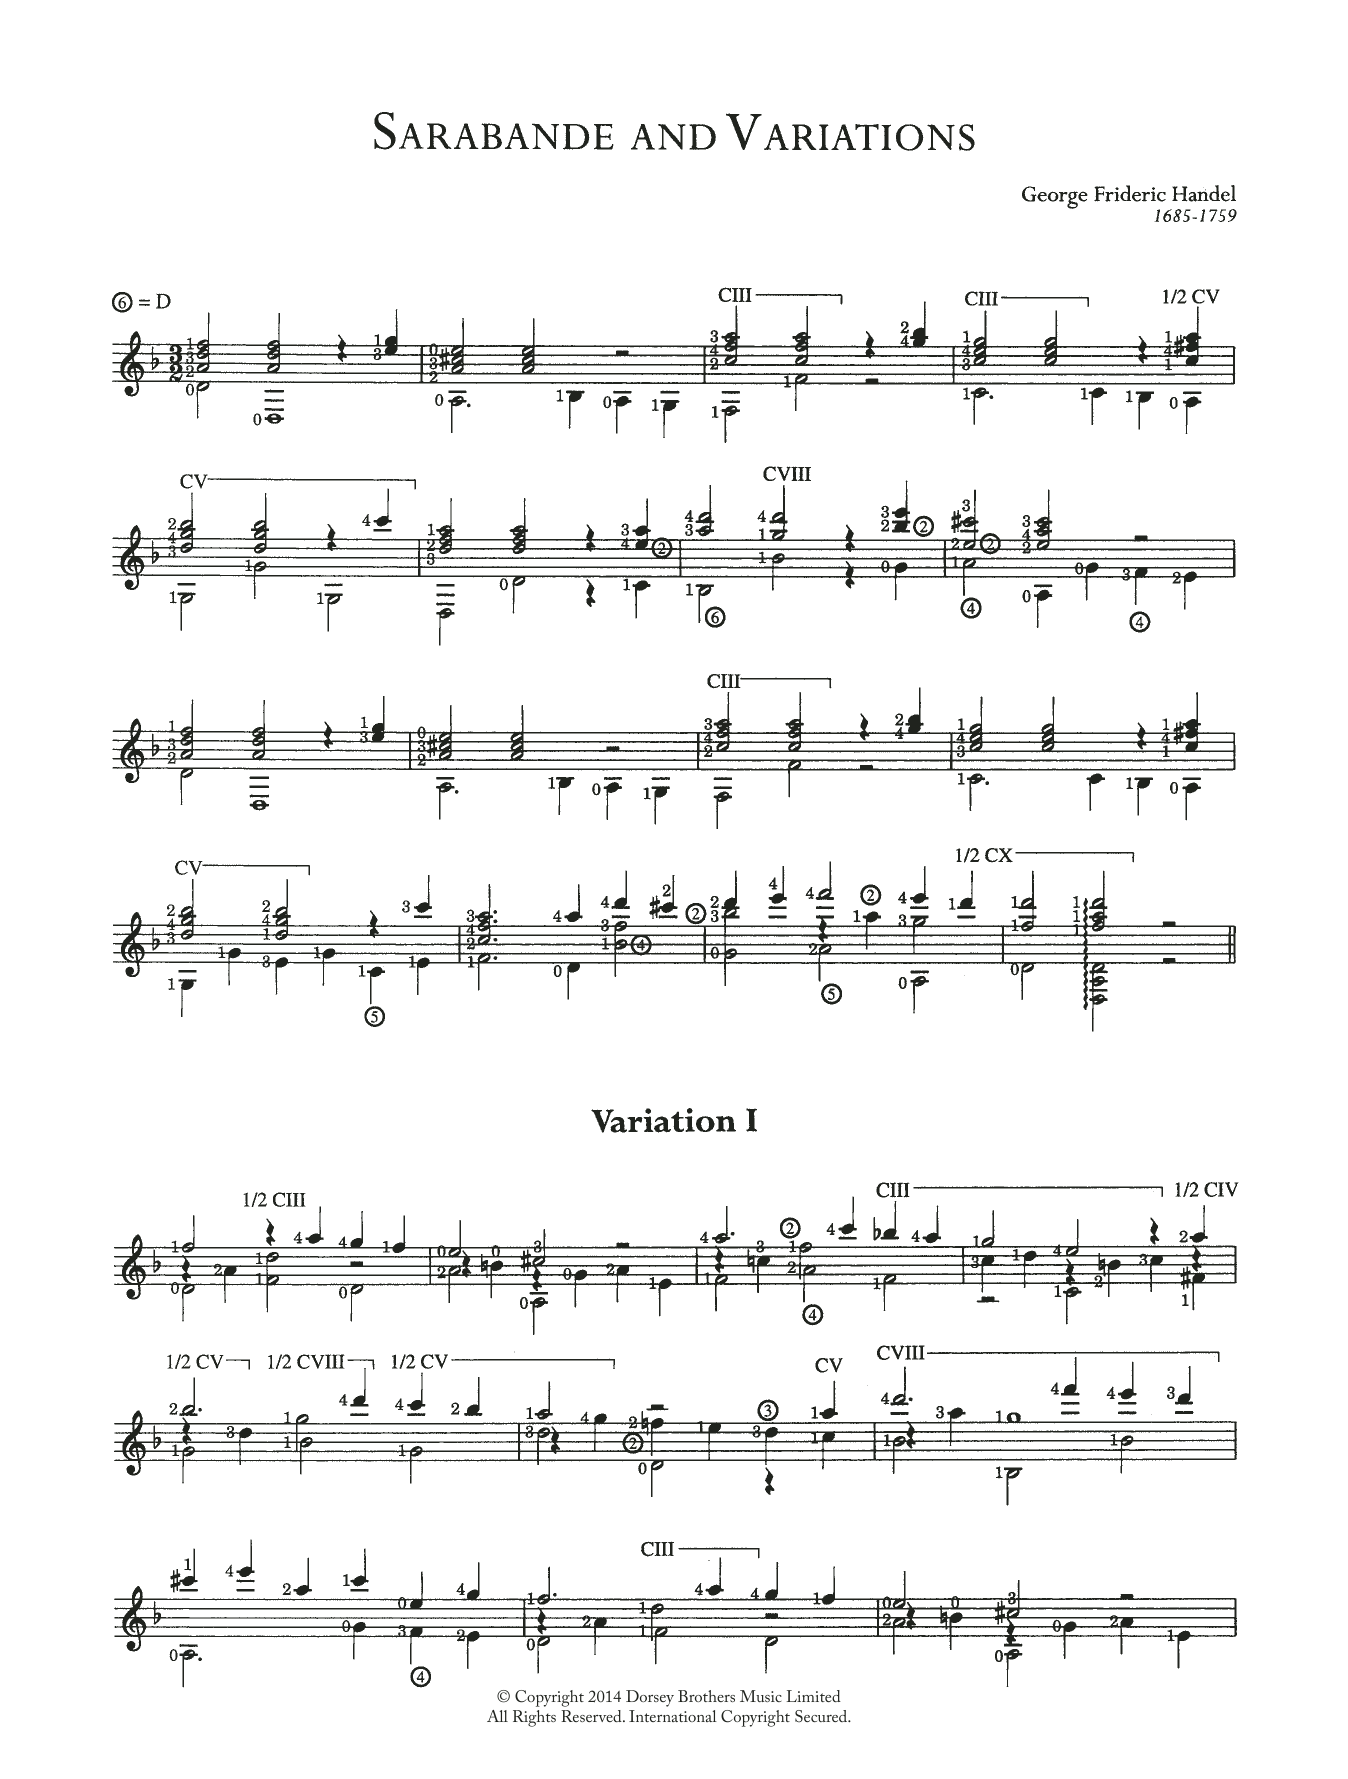 Download George Frideric Handel Sarabande And Variations Sheet Music